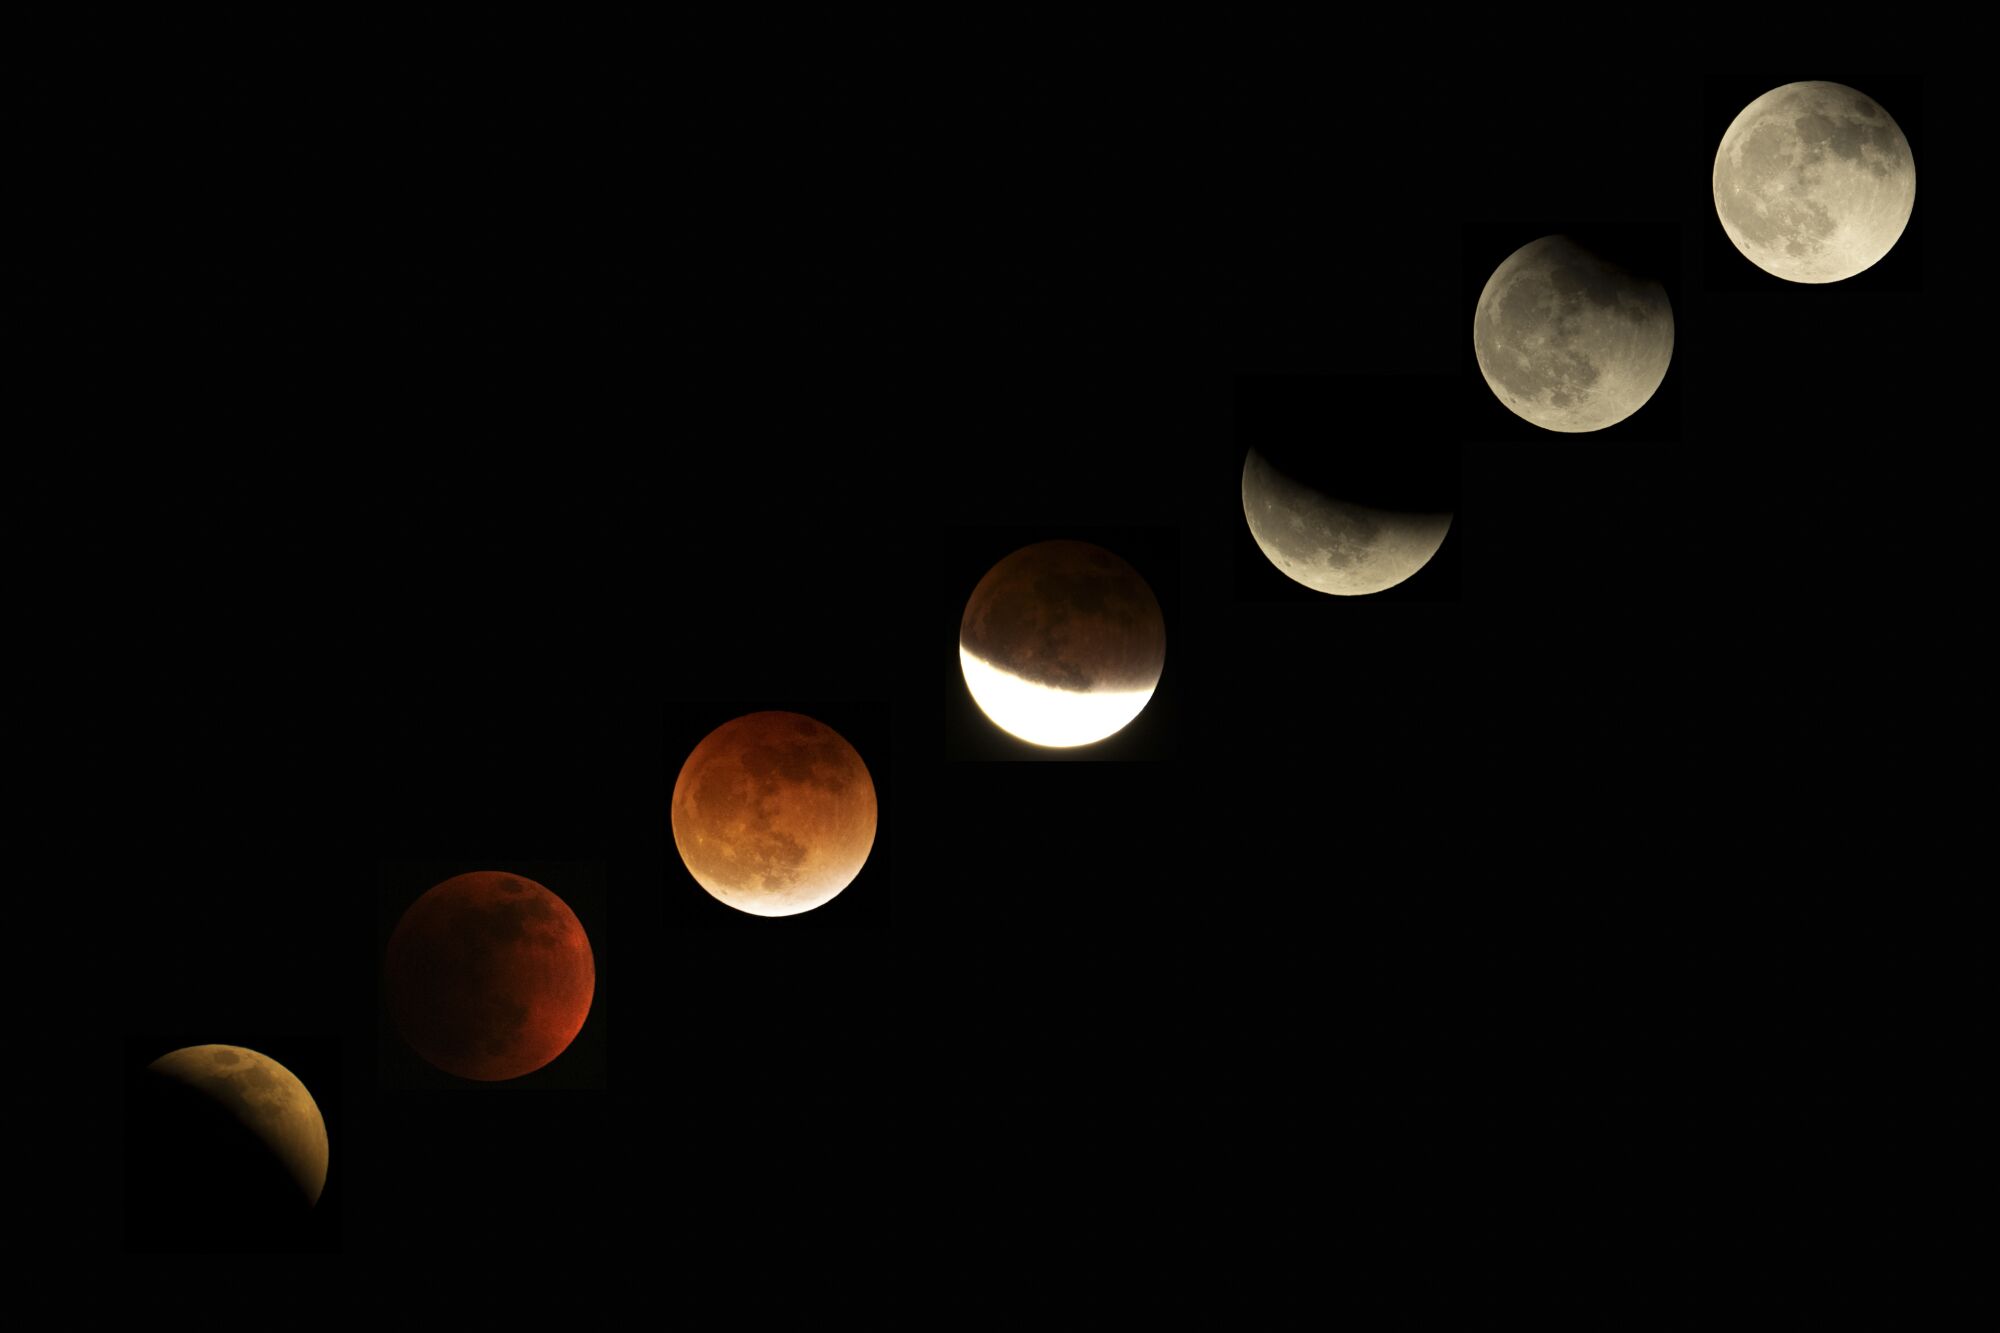 A multiple-exposure image of a lunar eclipse